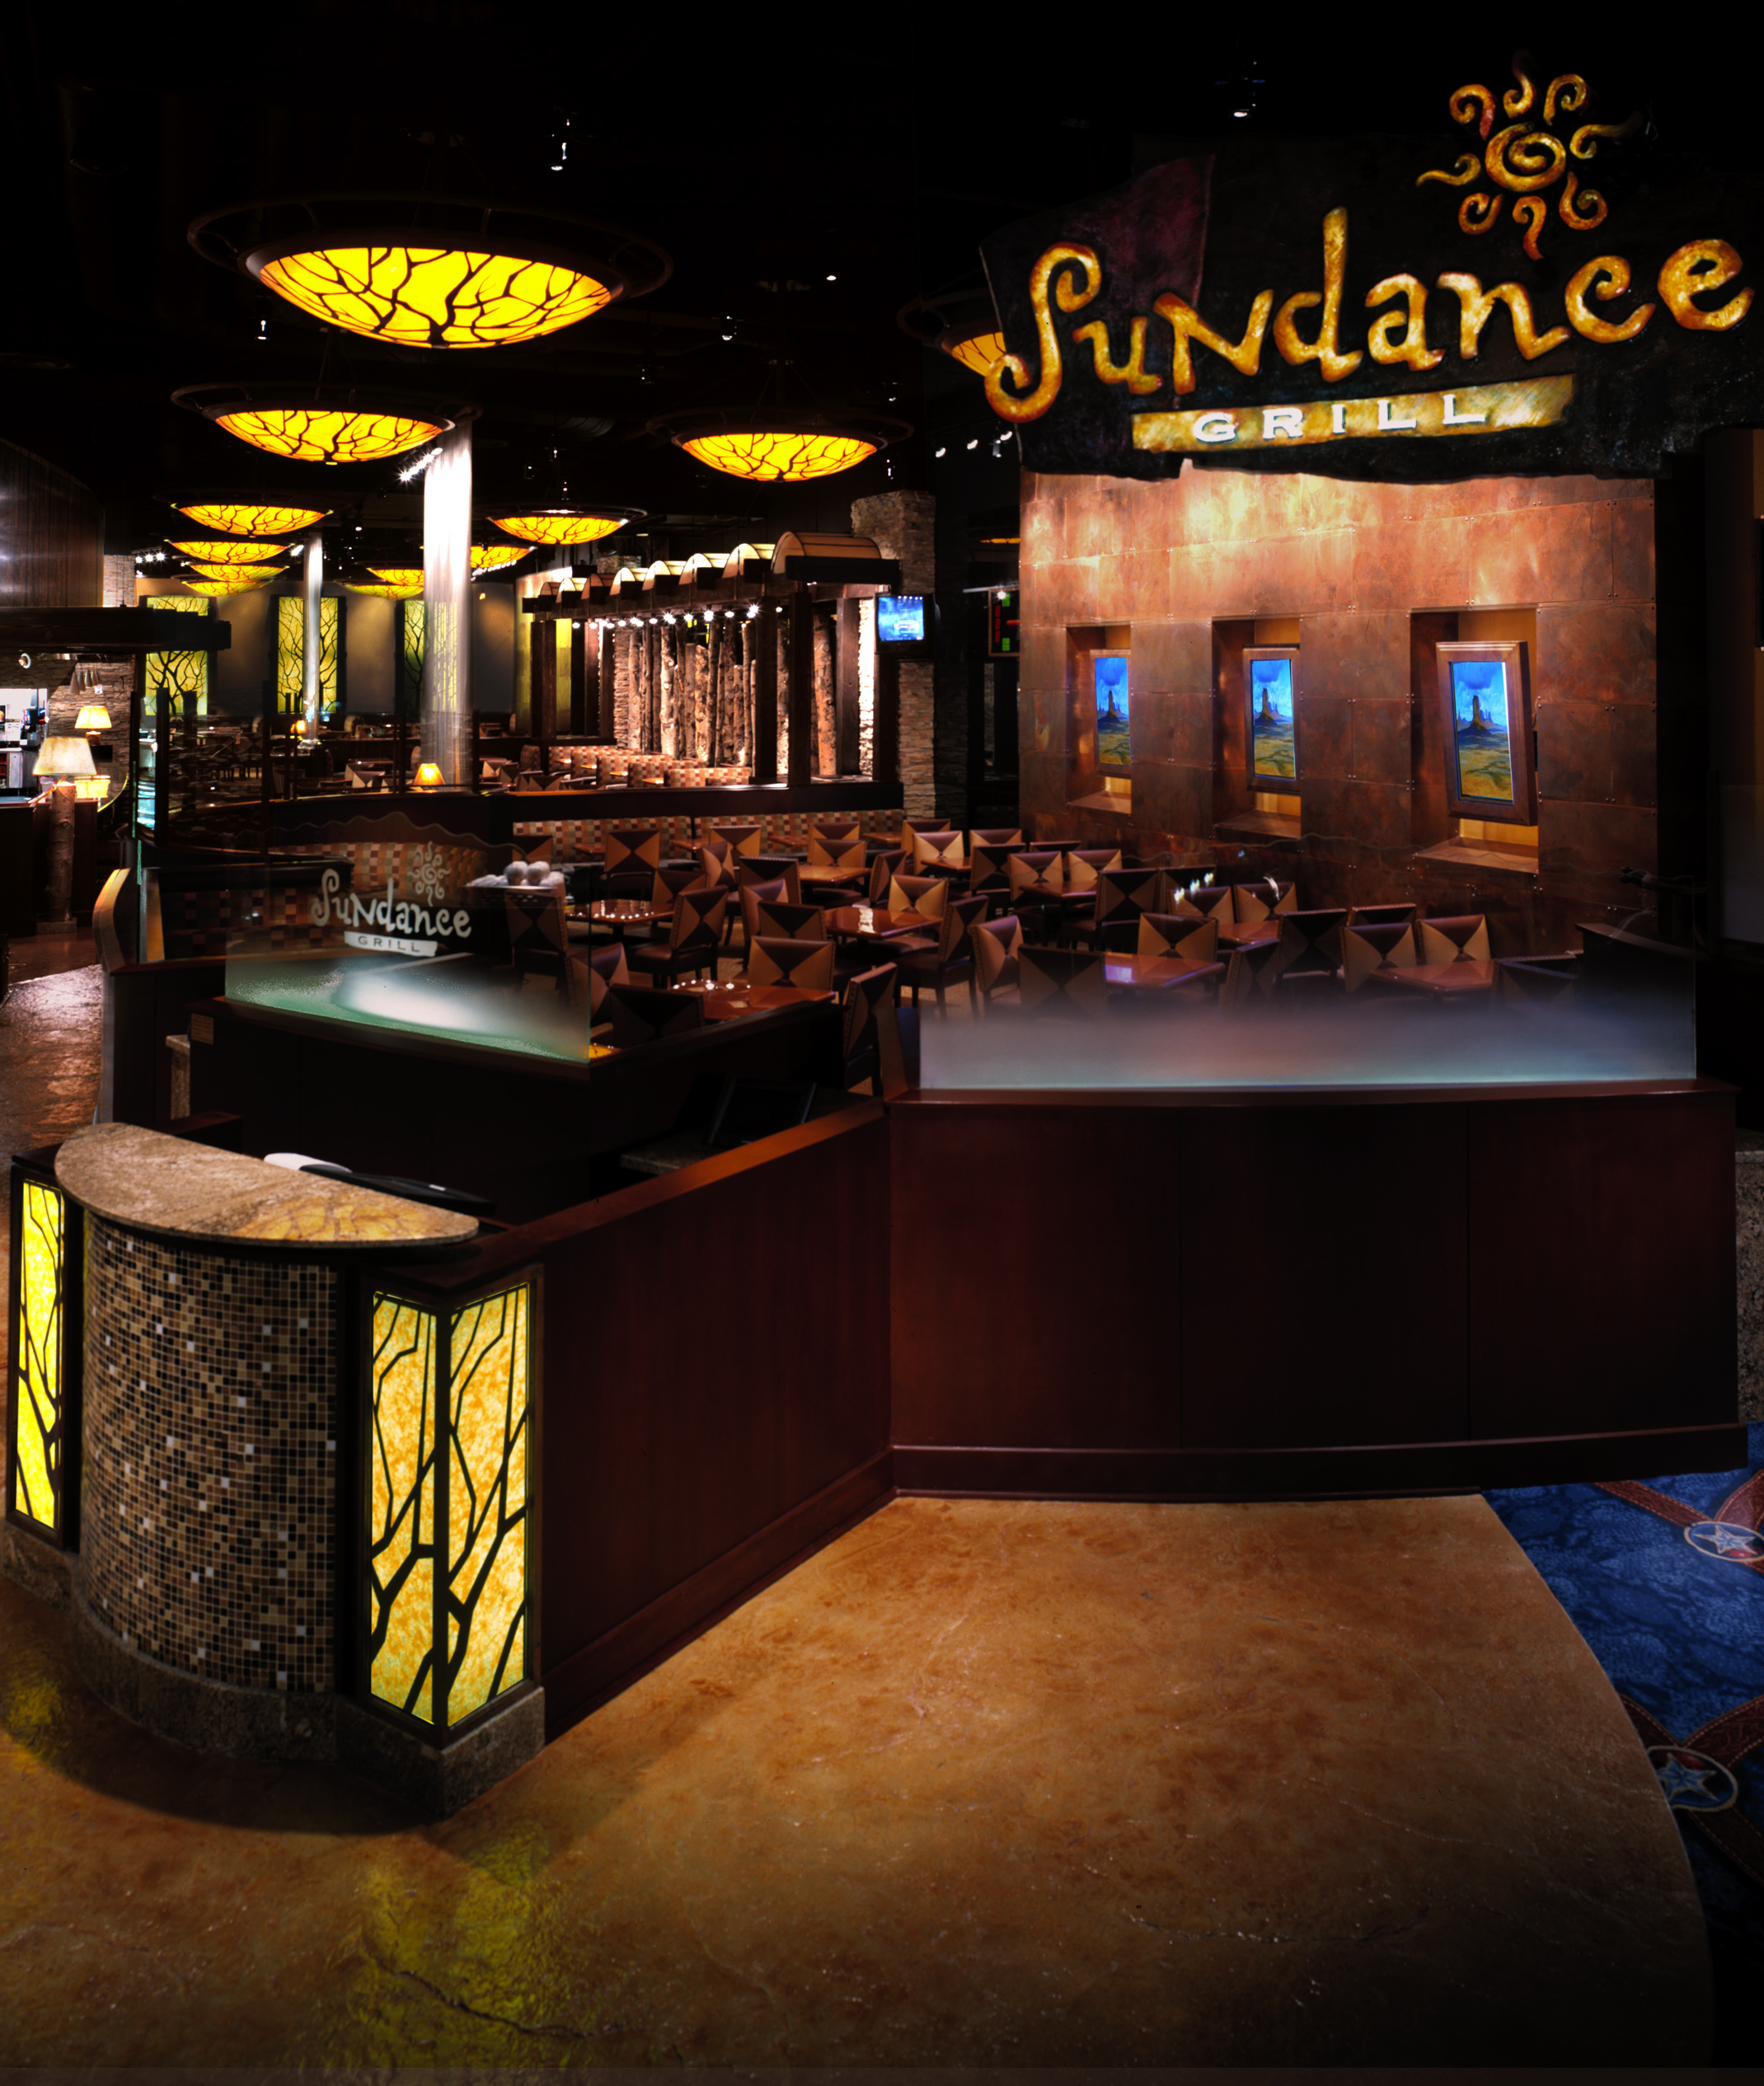 Sundance Grill entrance at Silverton Casino in Las Vegas